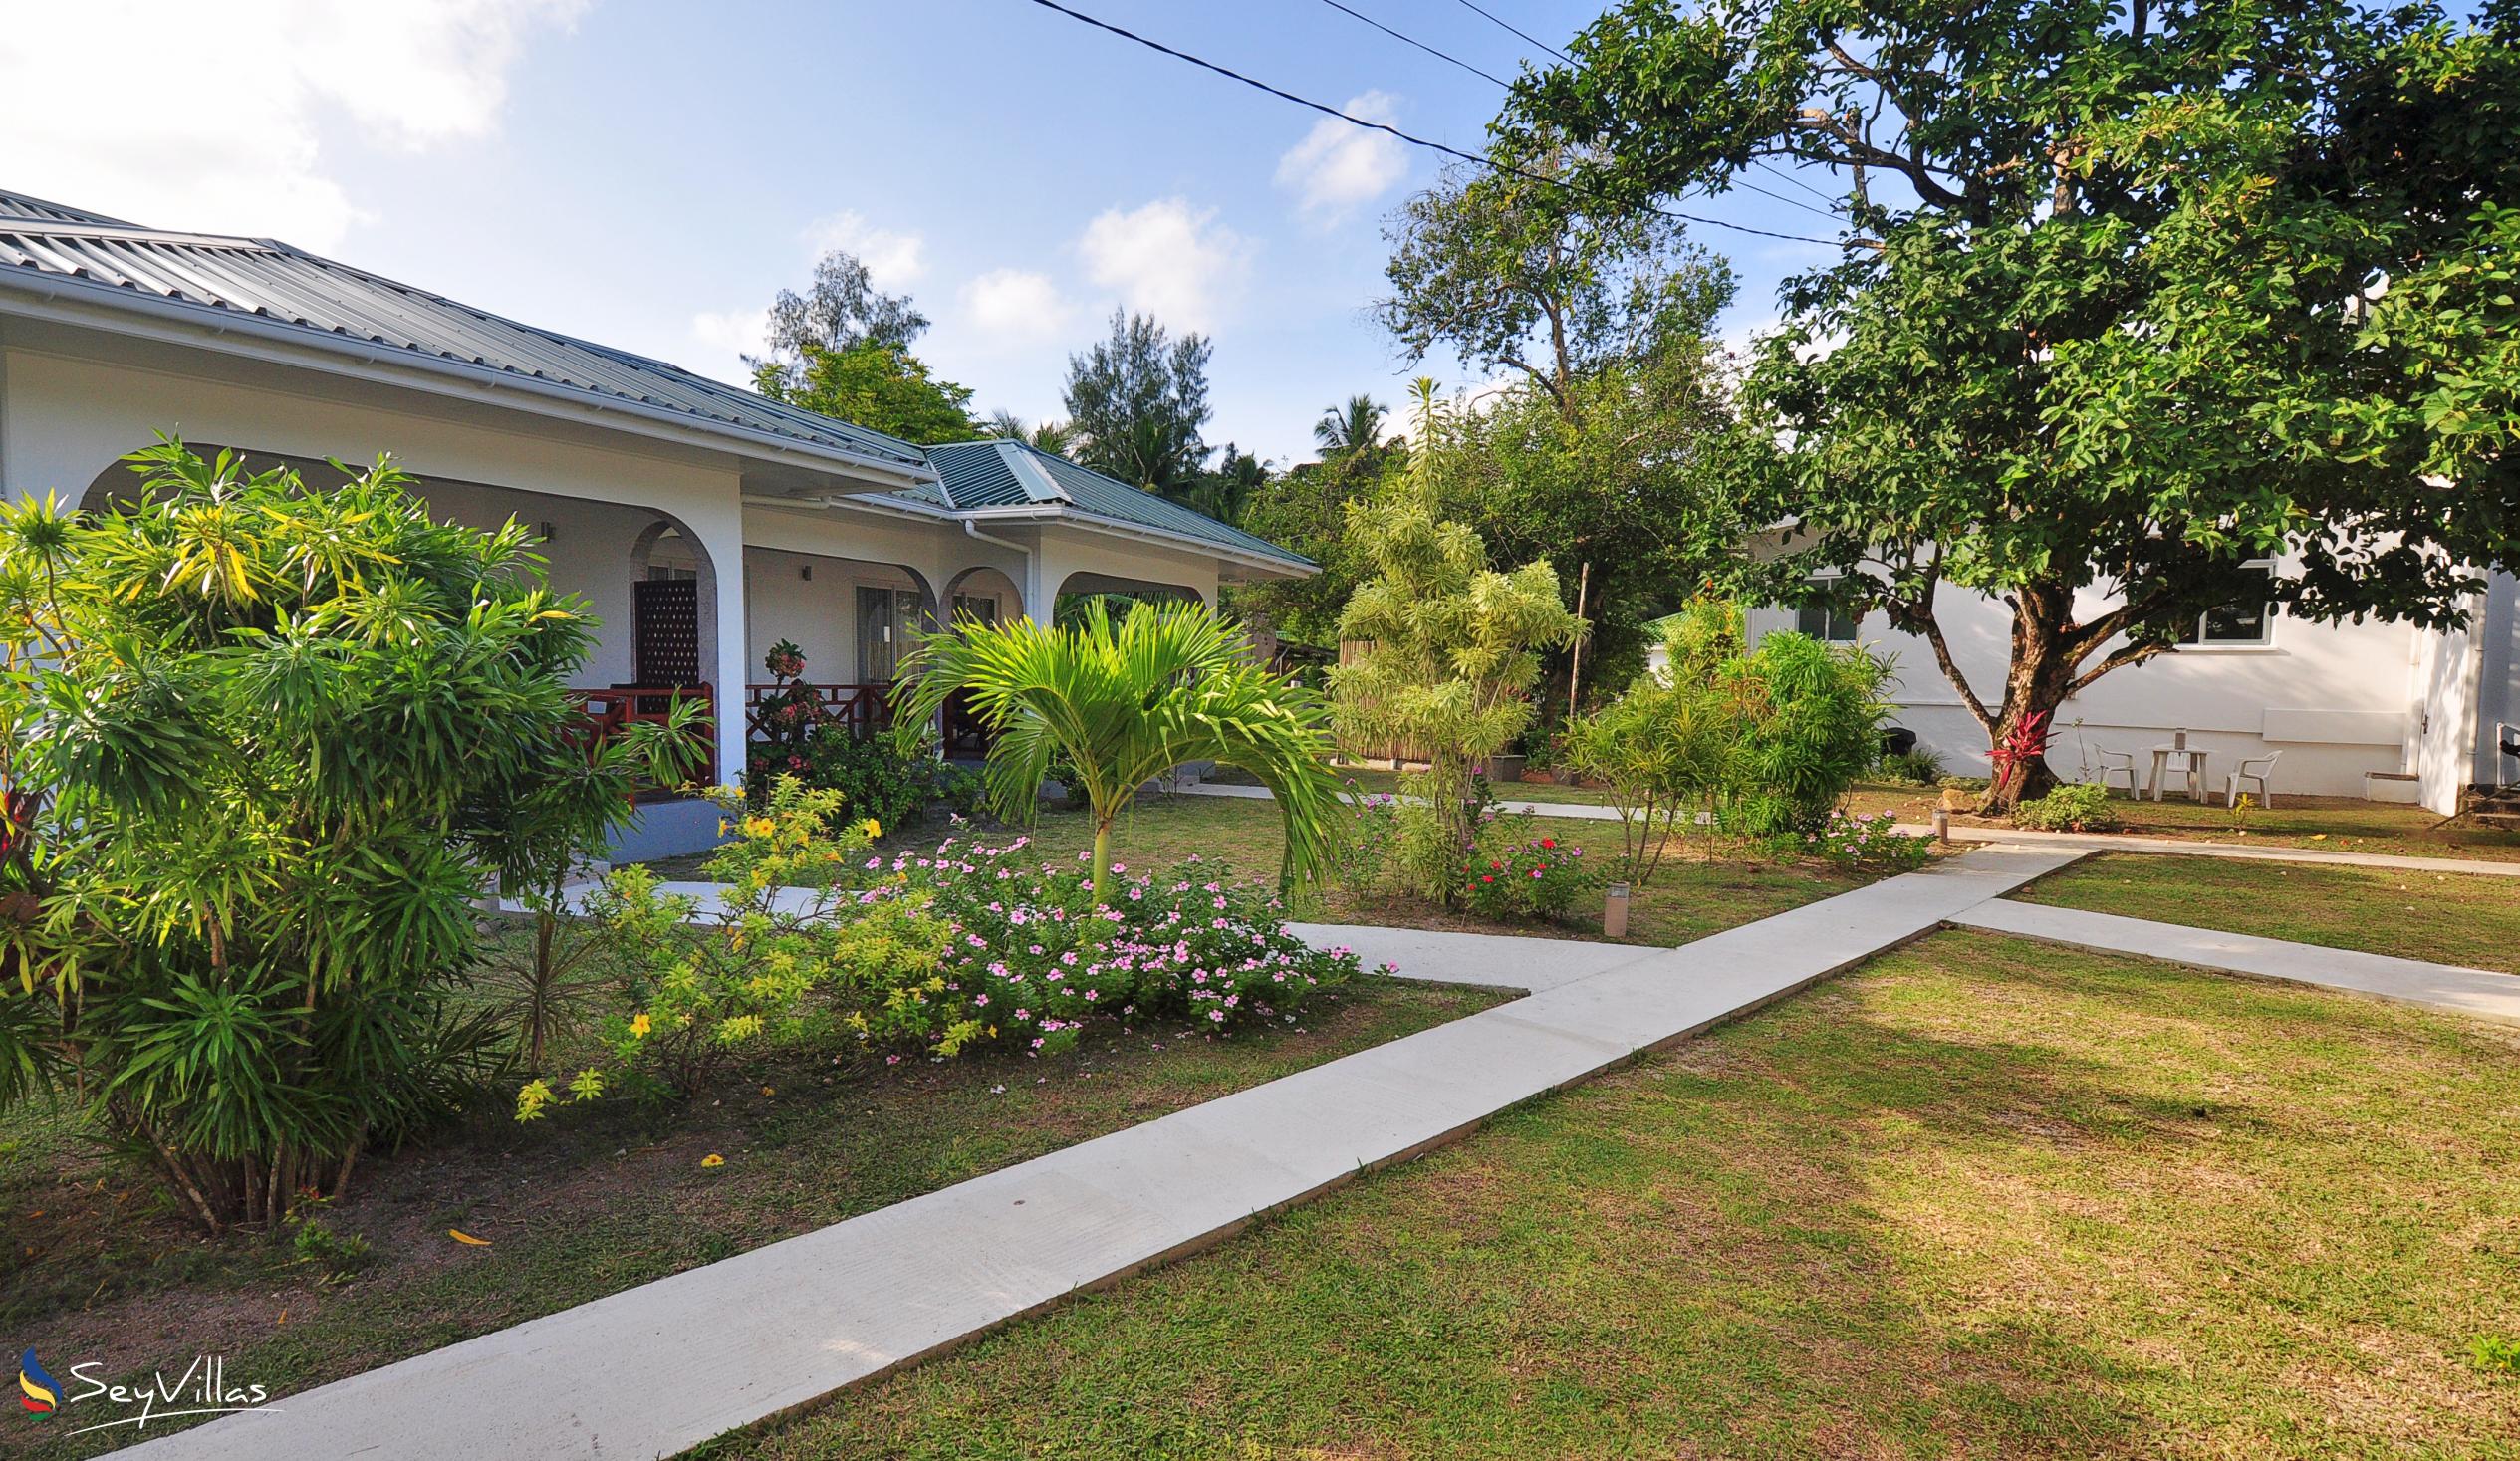 Foto 14: Coco Blanche - Villa mit Gartenblick - Mahé (Seychellen)